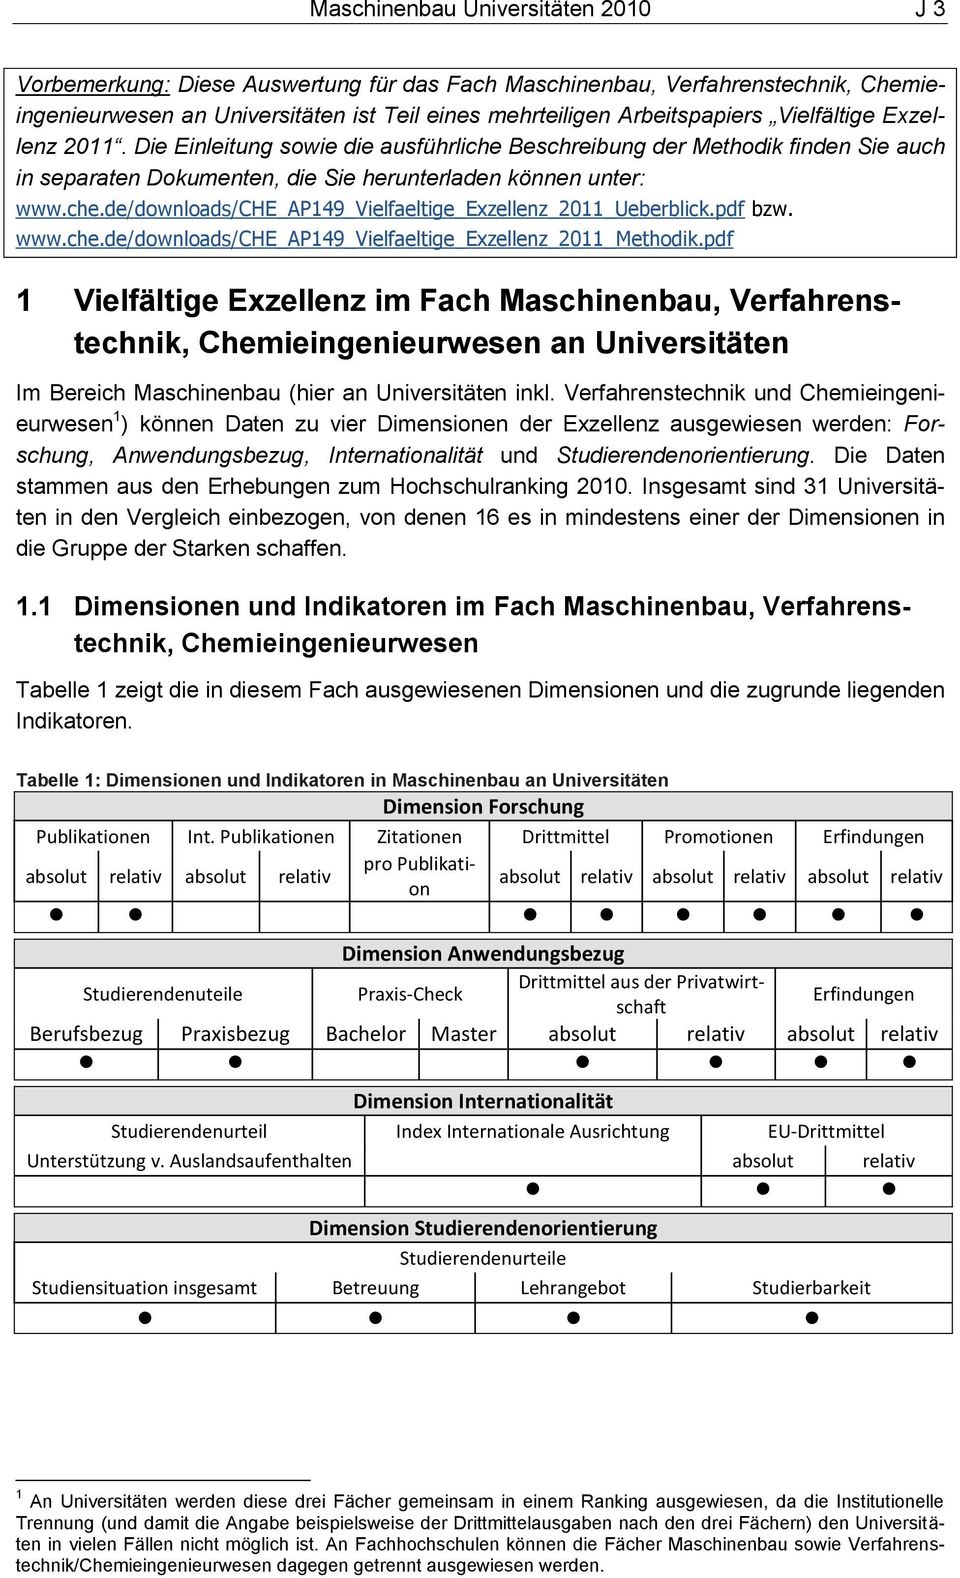 pdf bzw. www.che.de/downloads/che_ap149_vielfaeltige_exzellenz_2011_methodik.